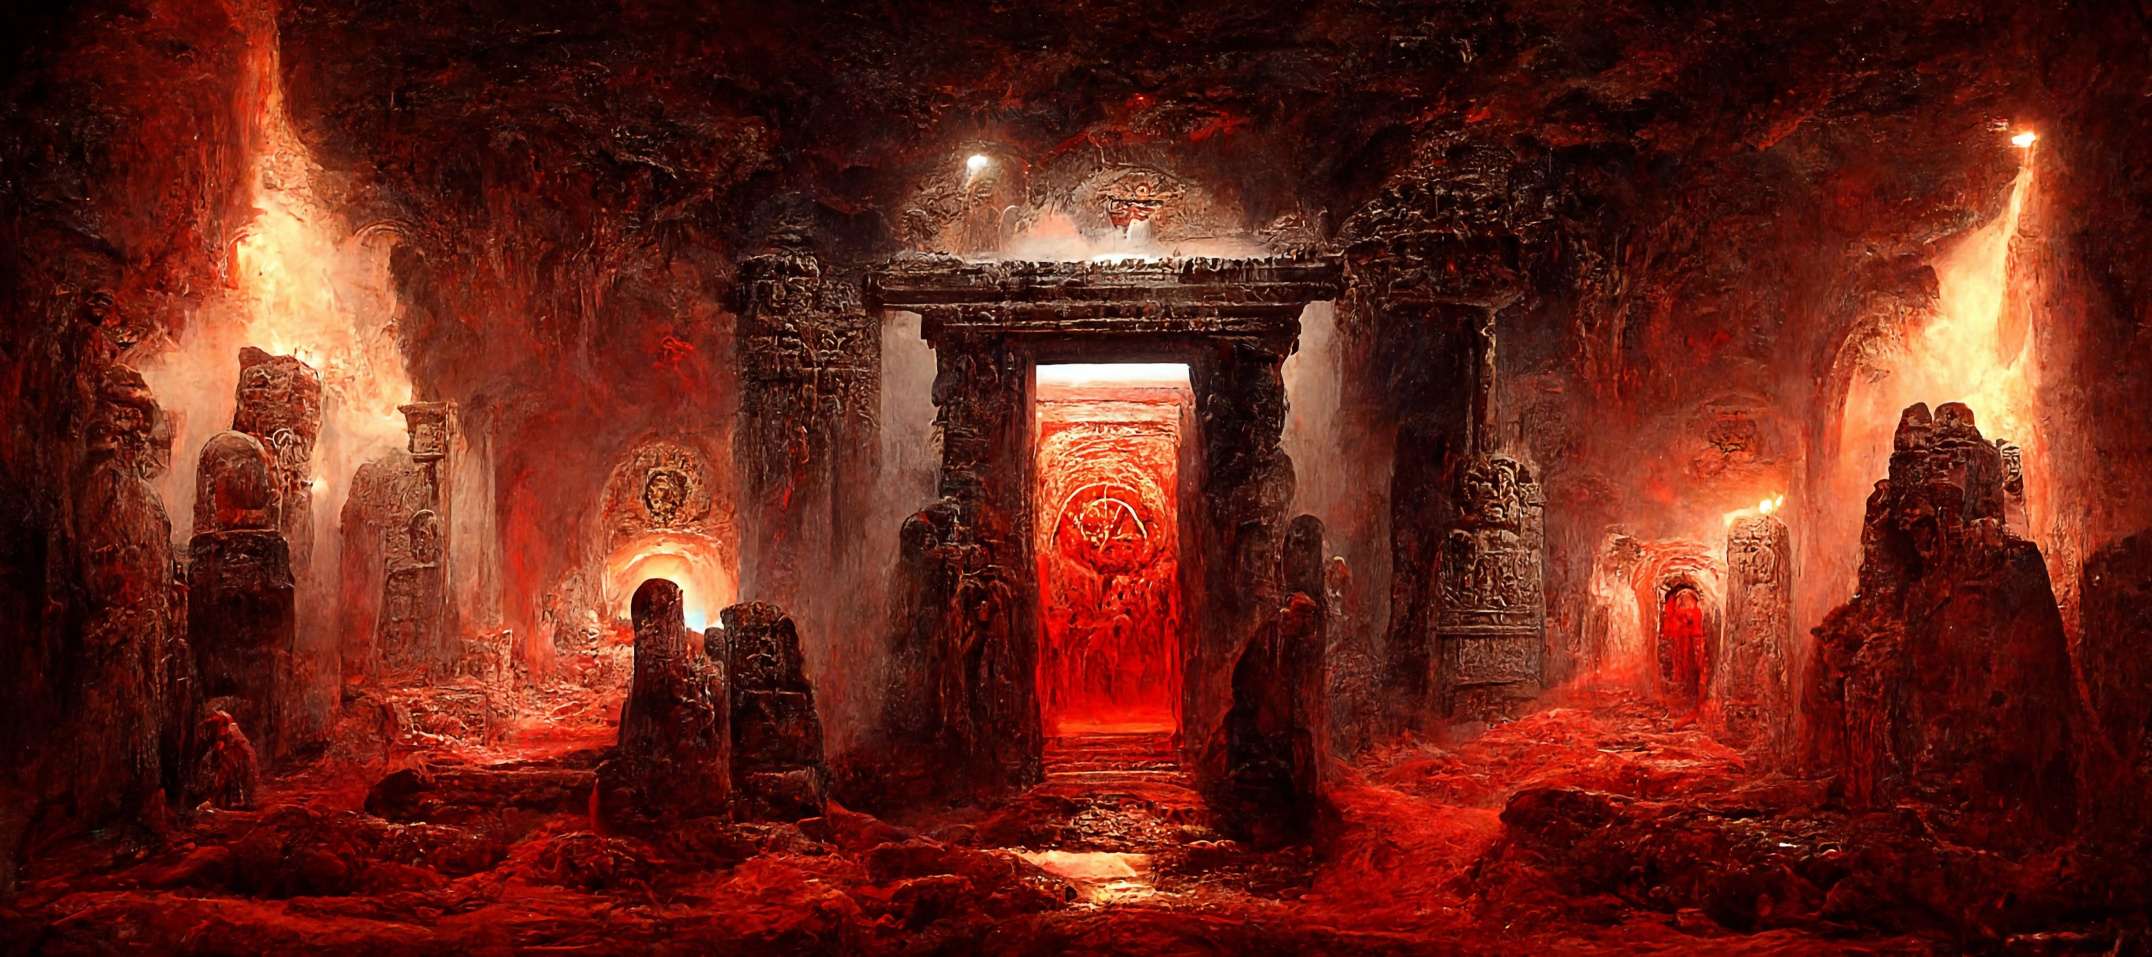 Agartha portal to hell